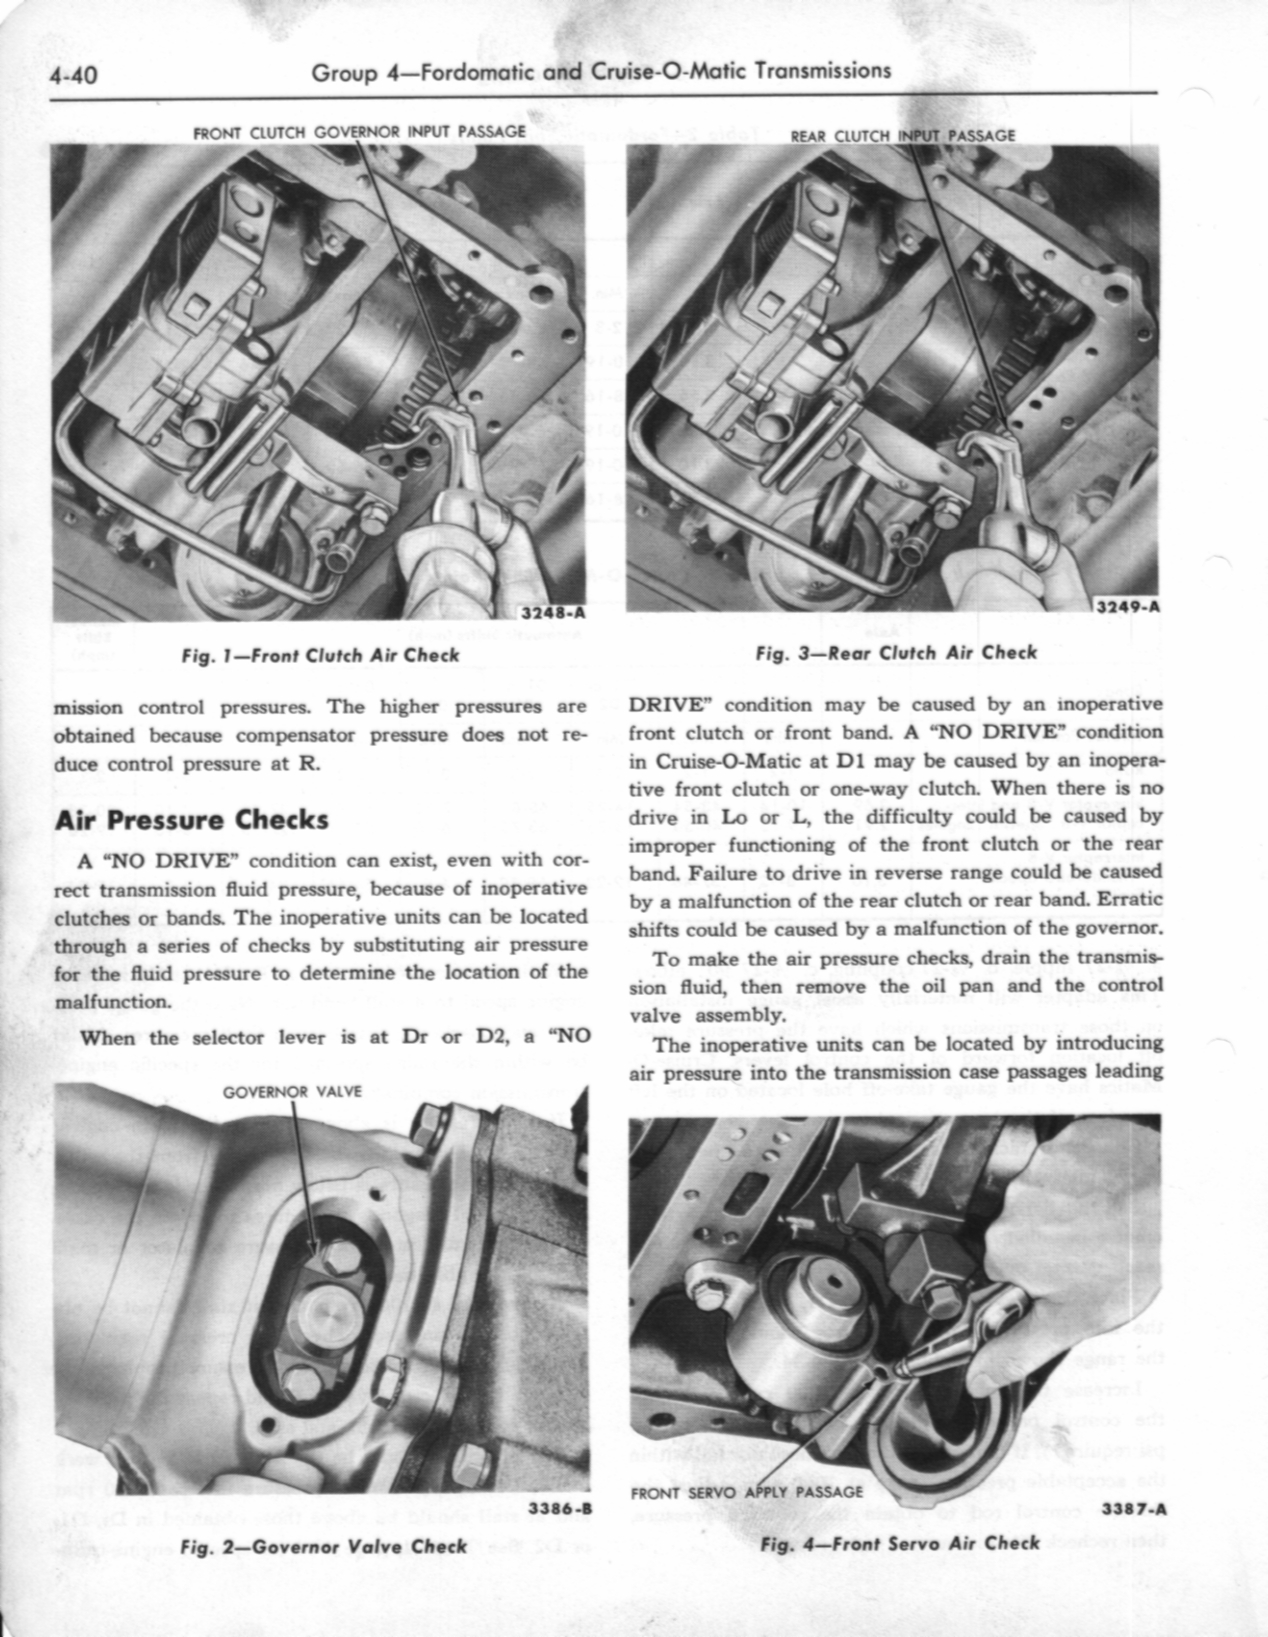 1964 Ford cruise o matic transmission